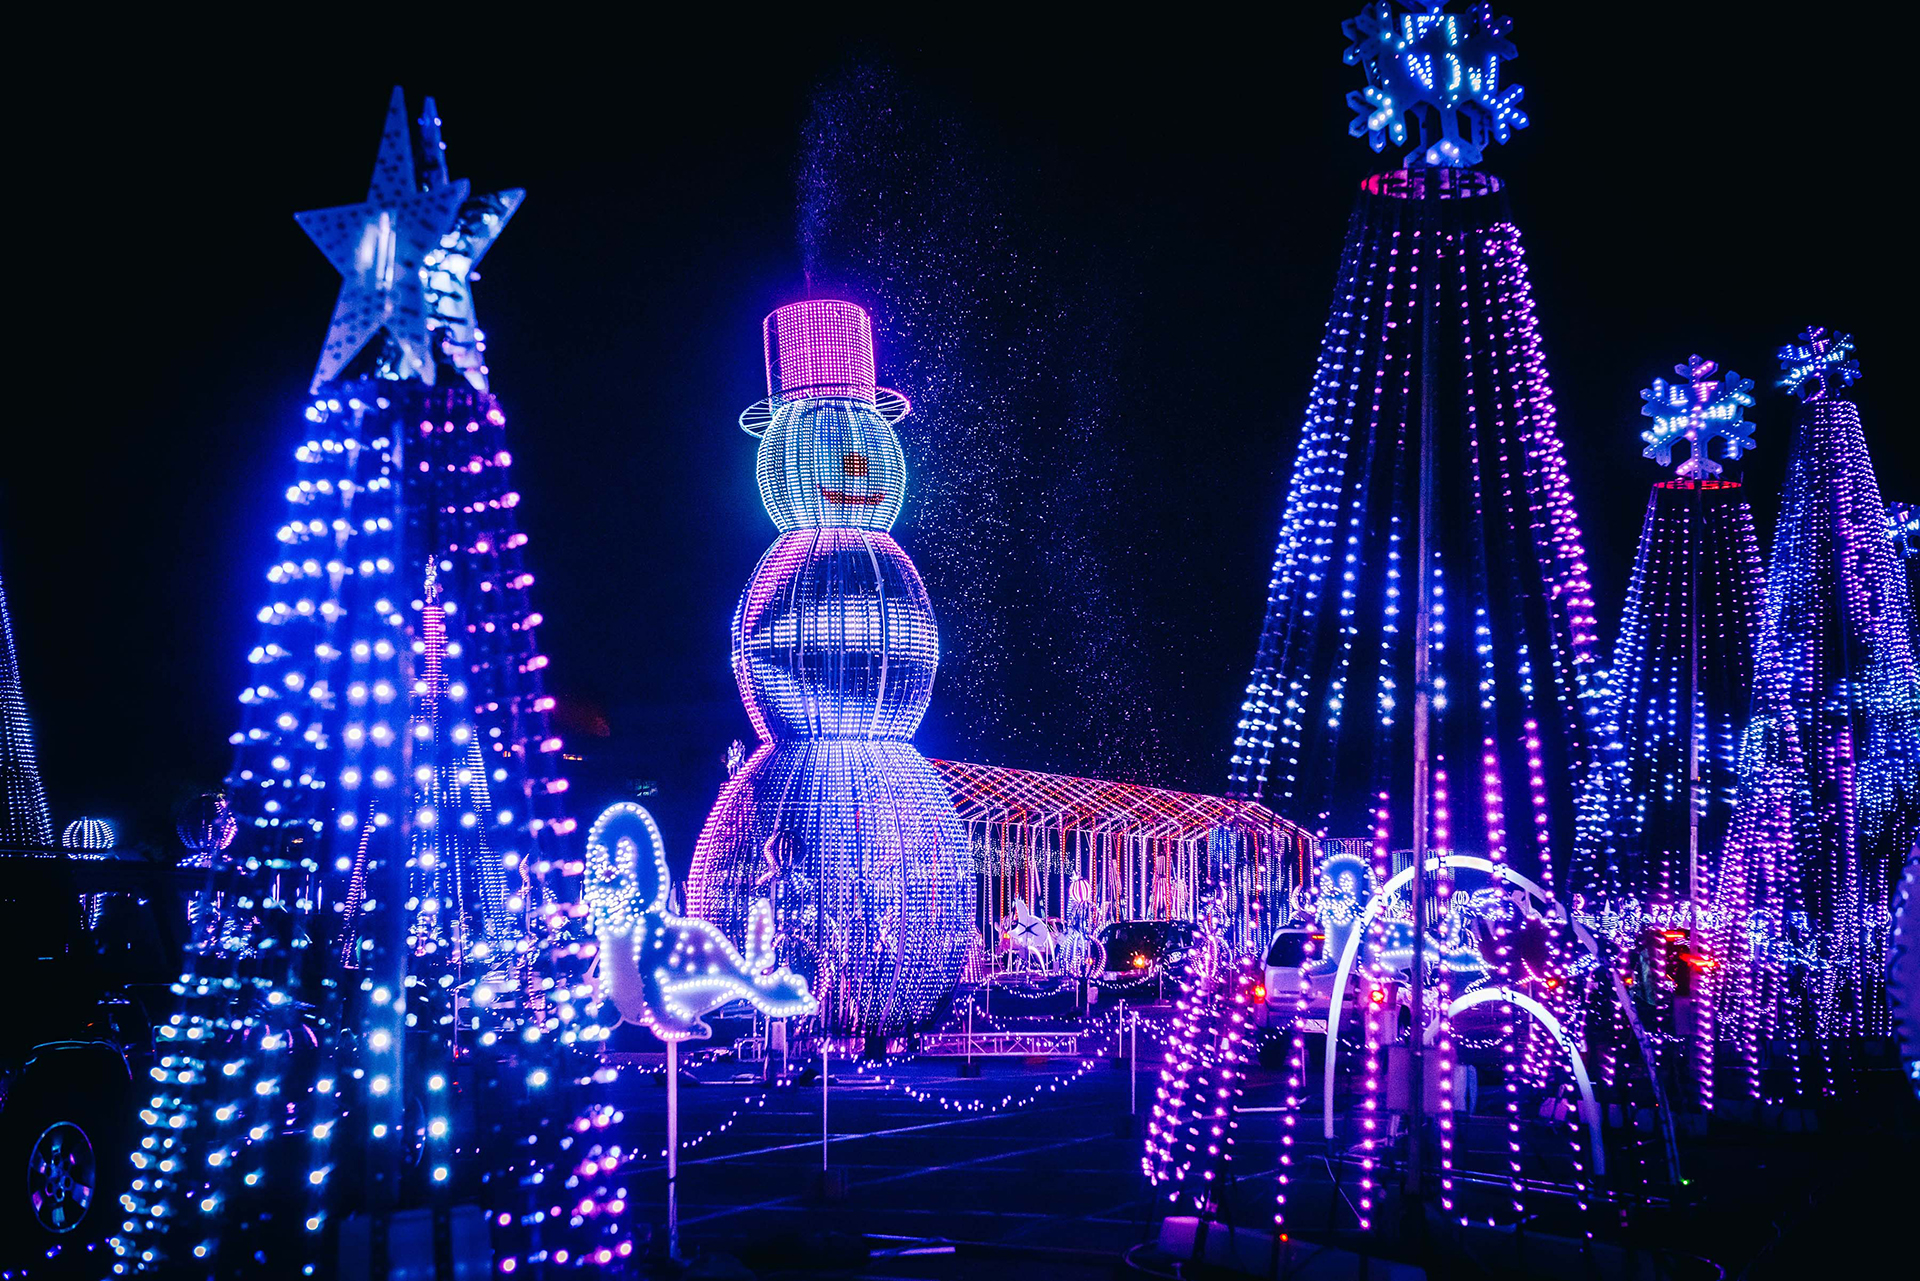 World of Illumination at Six Flags Great America